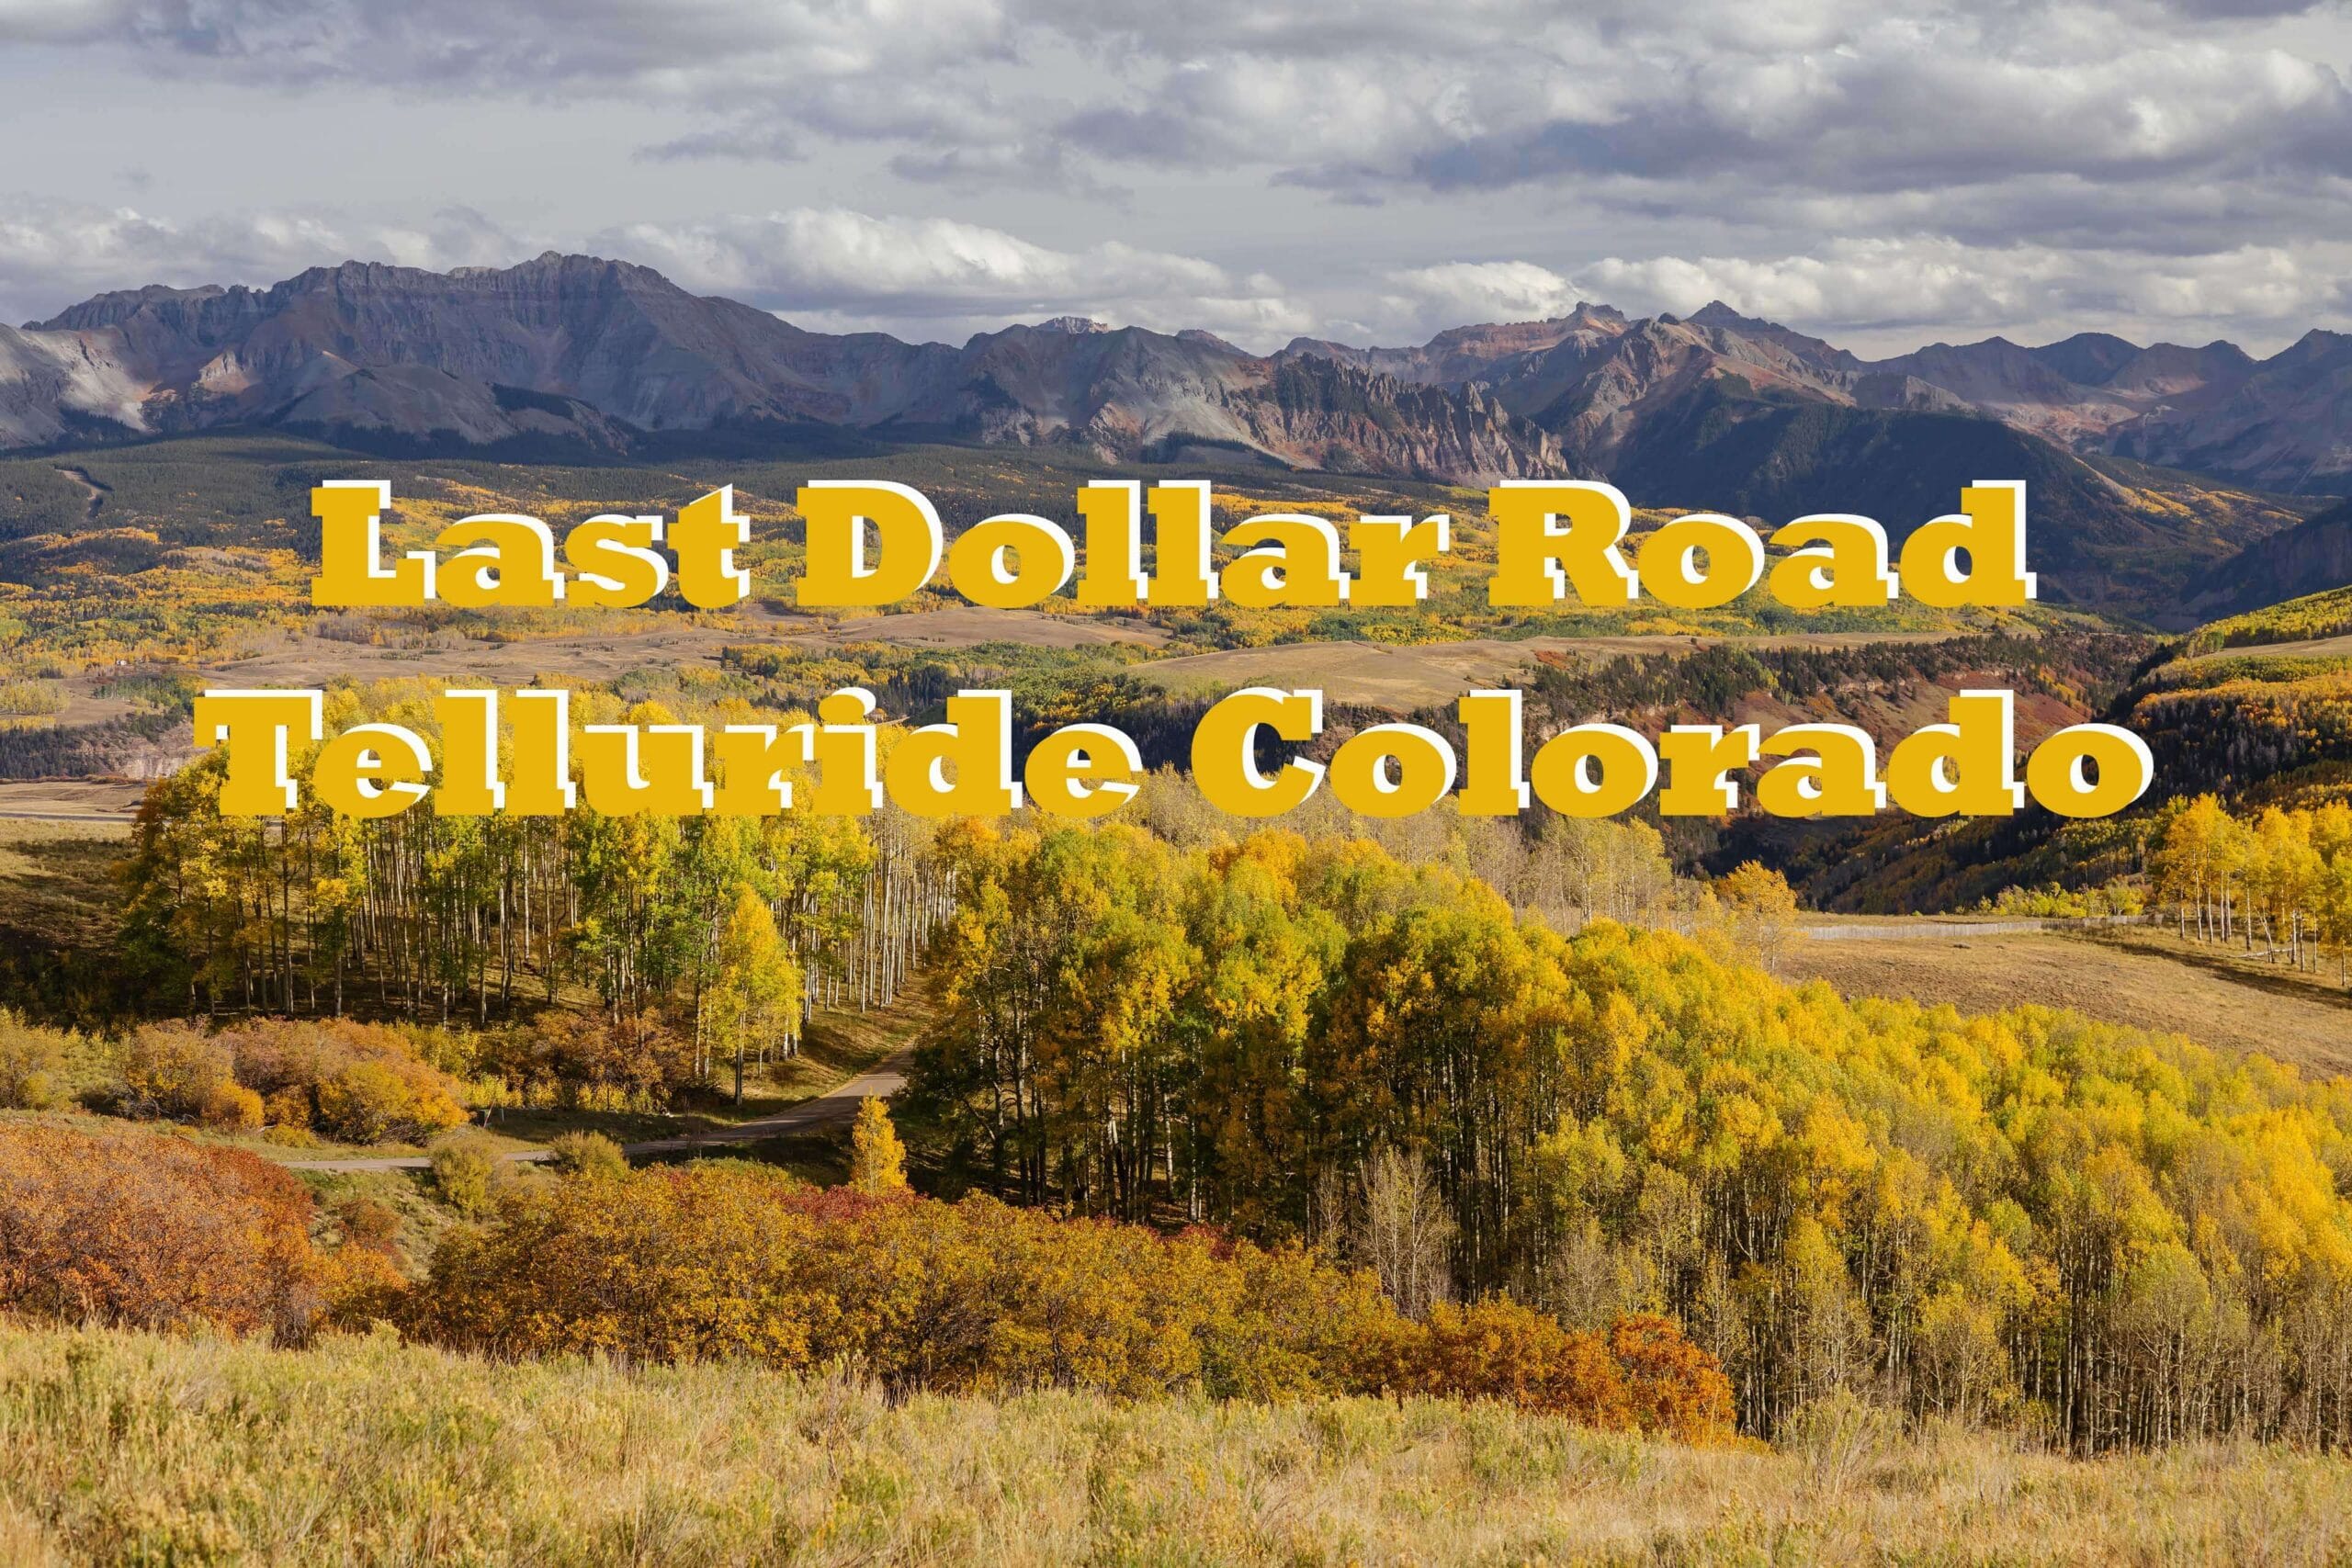 Last Dollar Road